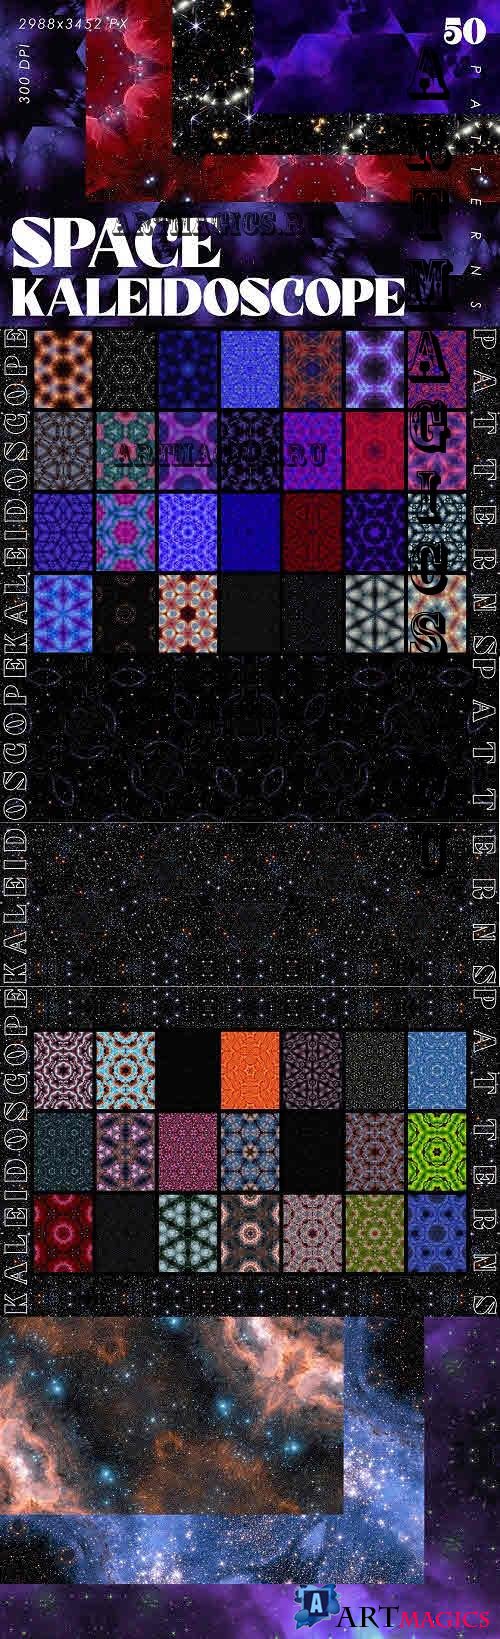 Space Kaleidoscope Patterns - 7456792